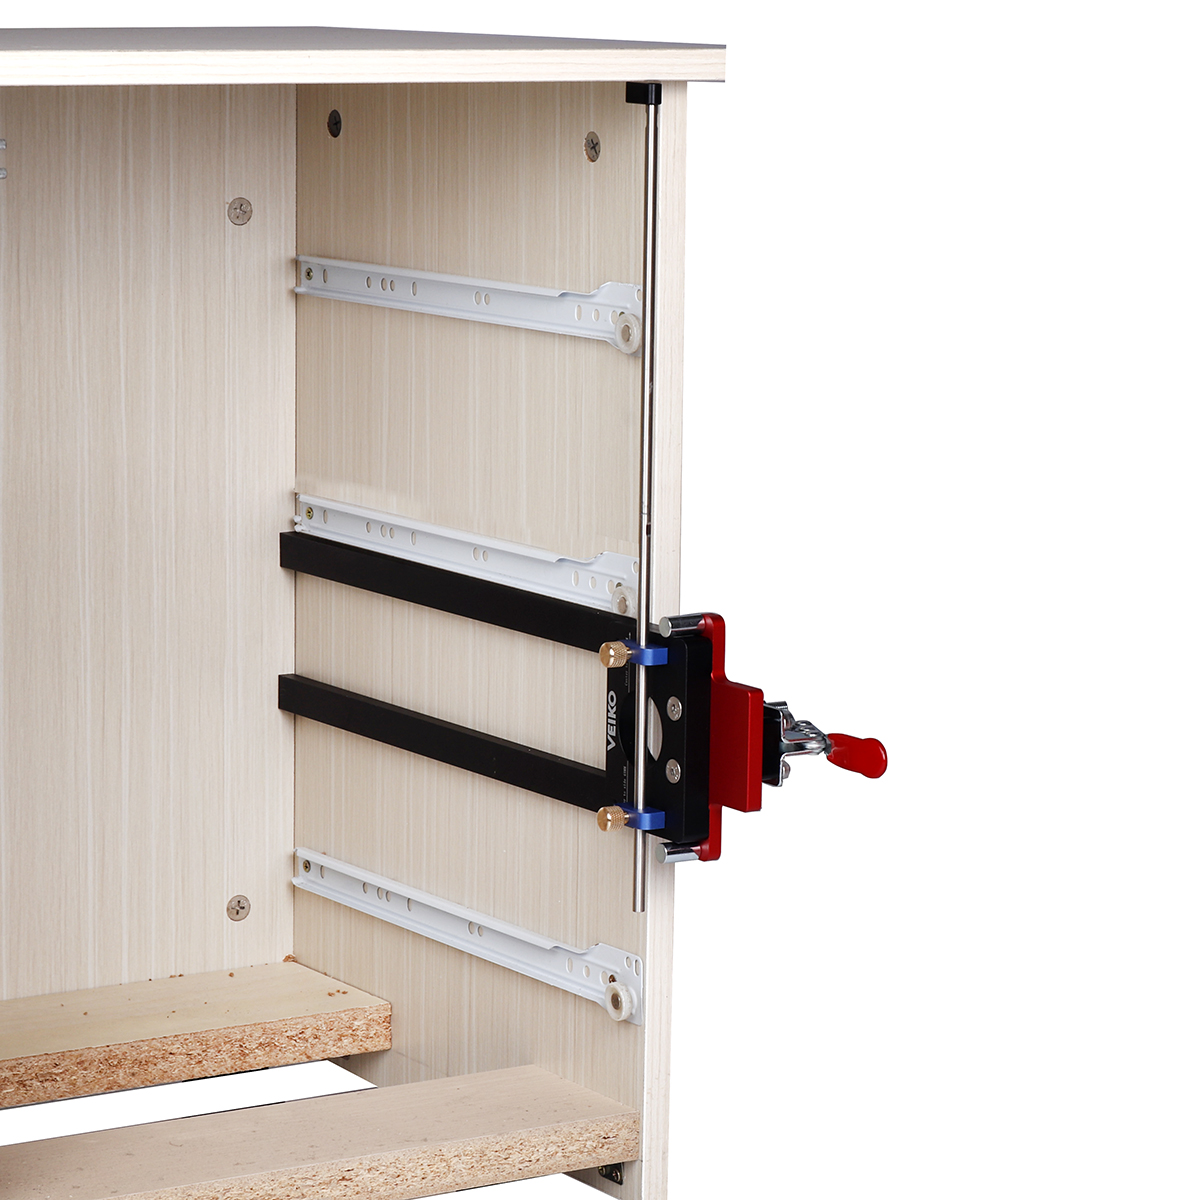 VEIKO-Aluminum-Alloy-Drawer-Slide-Jig-with-Adjustable-Clamp-for-Woodworking-Cabinet-Drawer-Slide-Ins-1911234-9